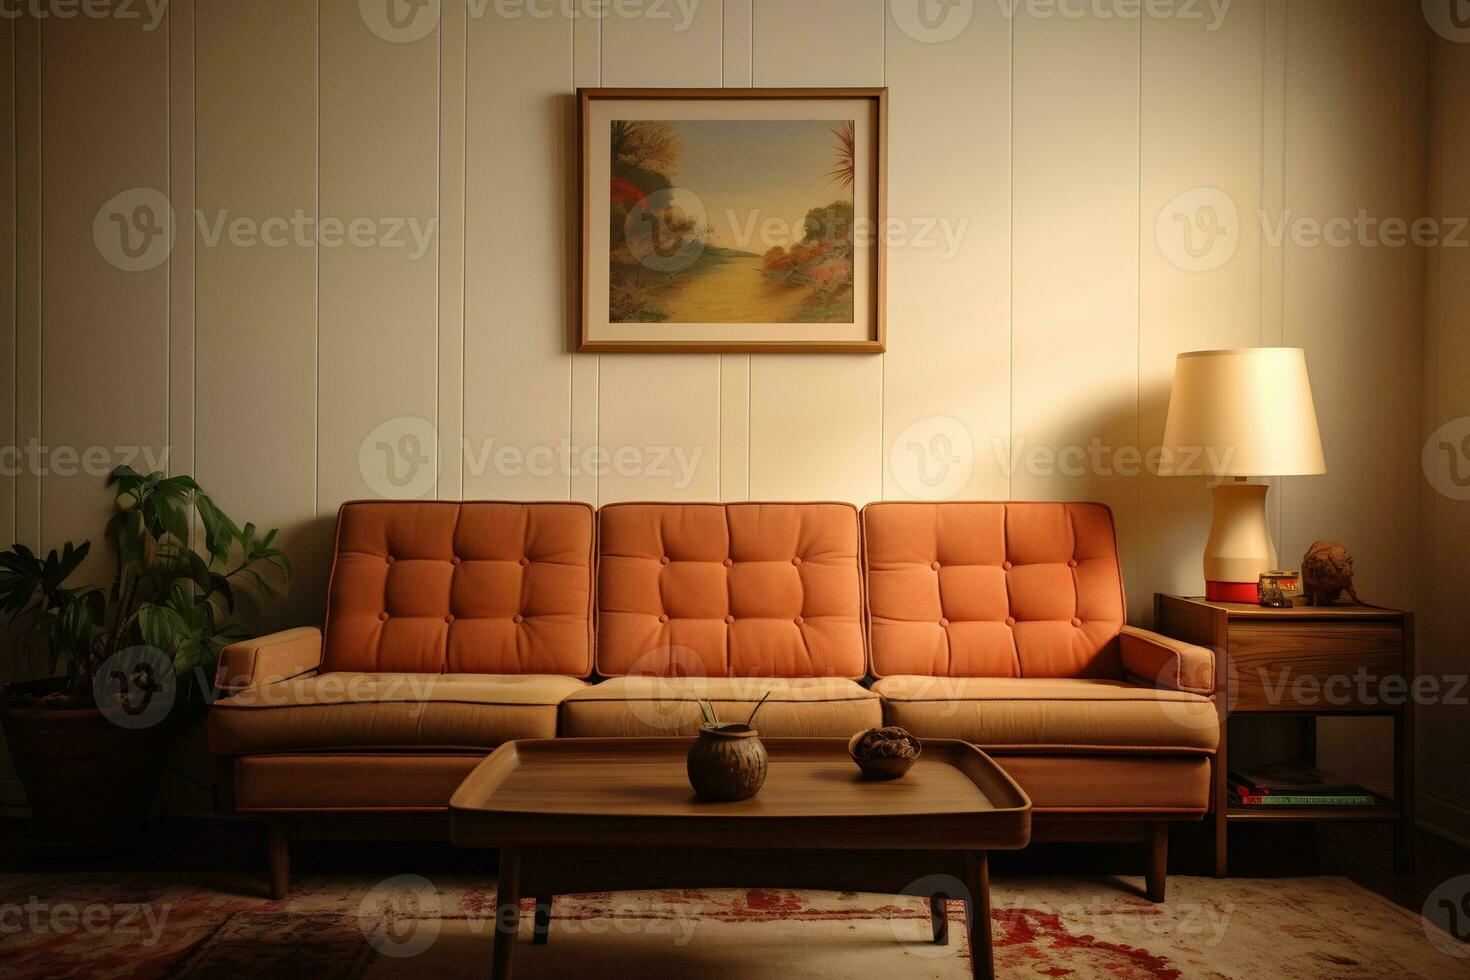 A retro inspired living room showcases a classic minimalist design AI generative photo